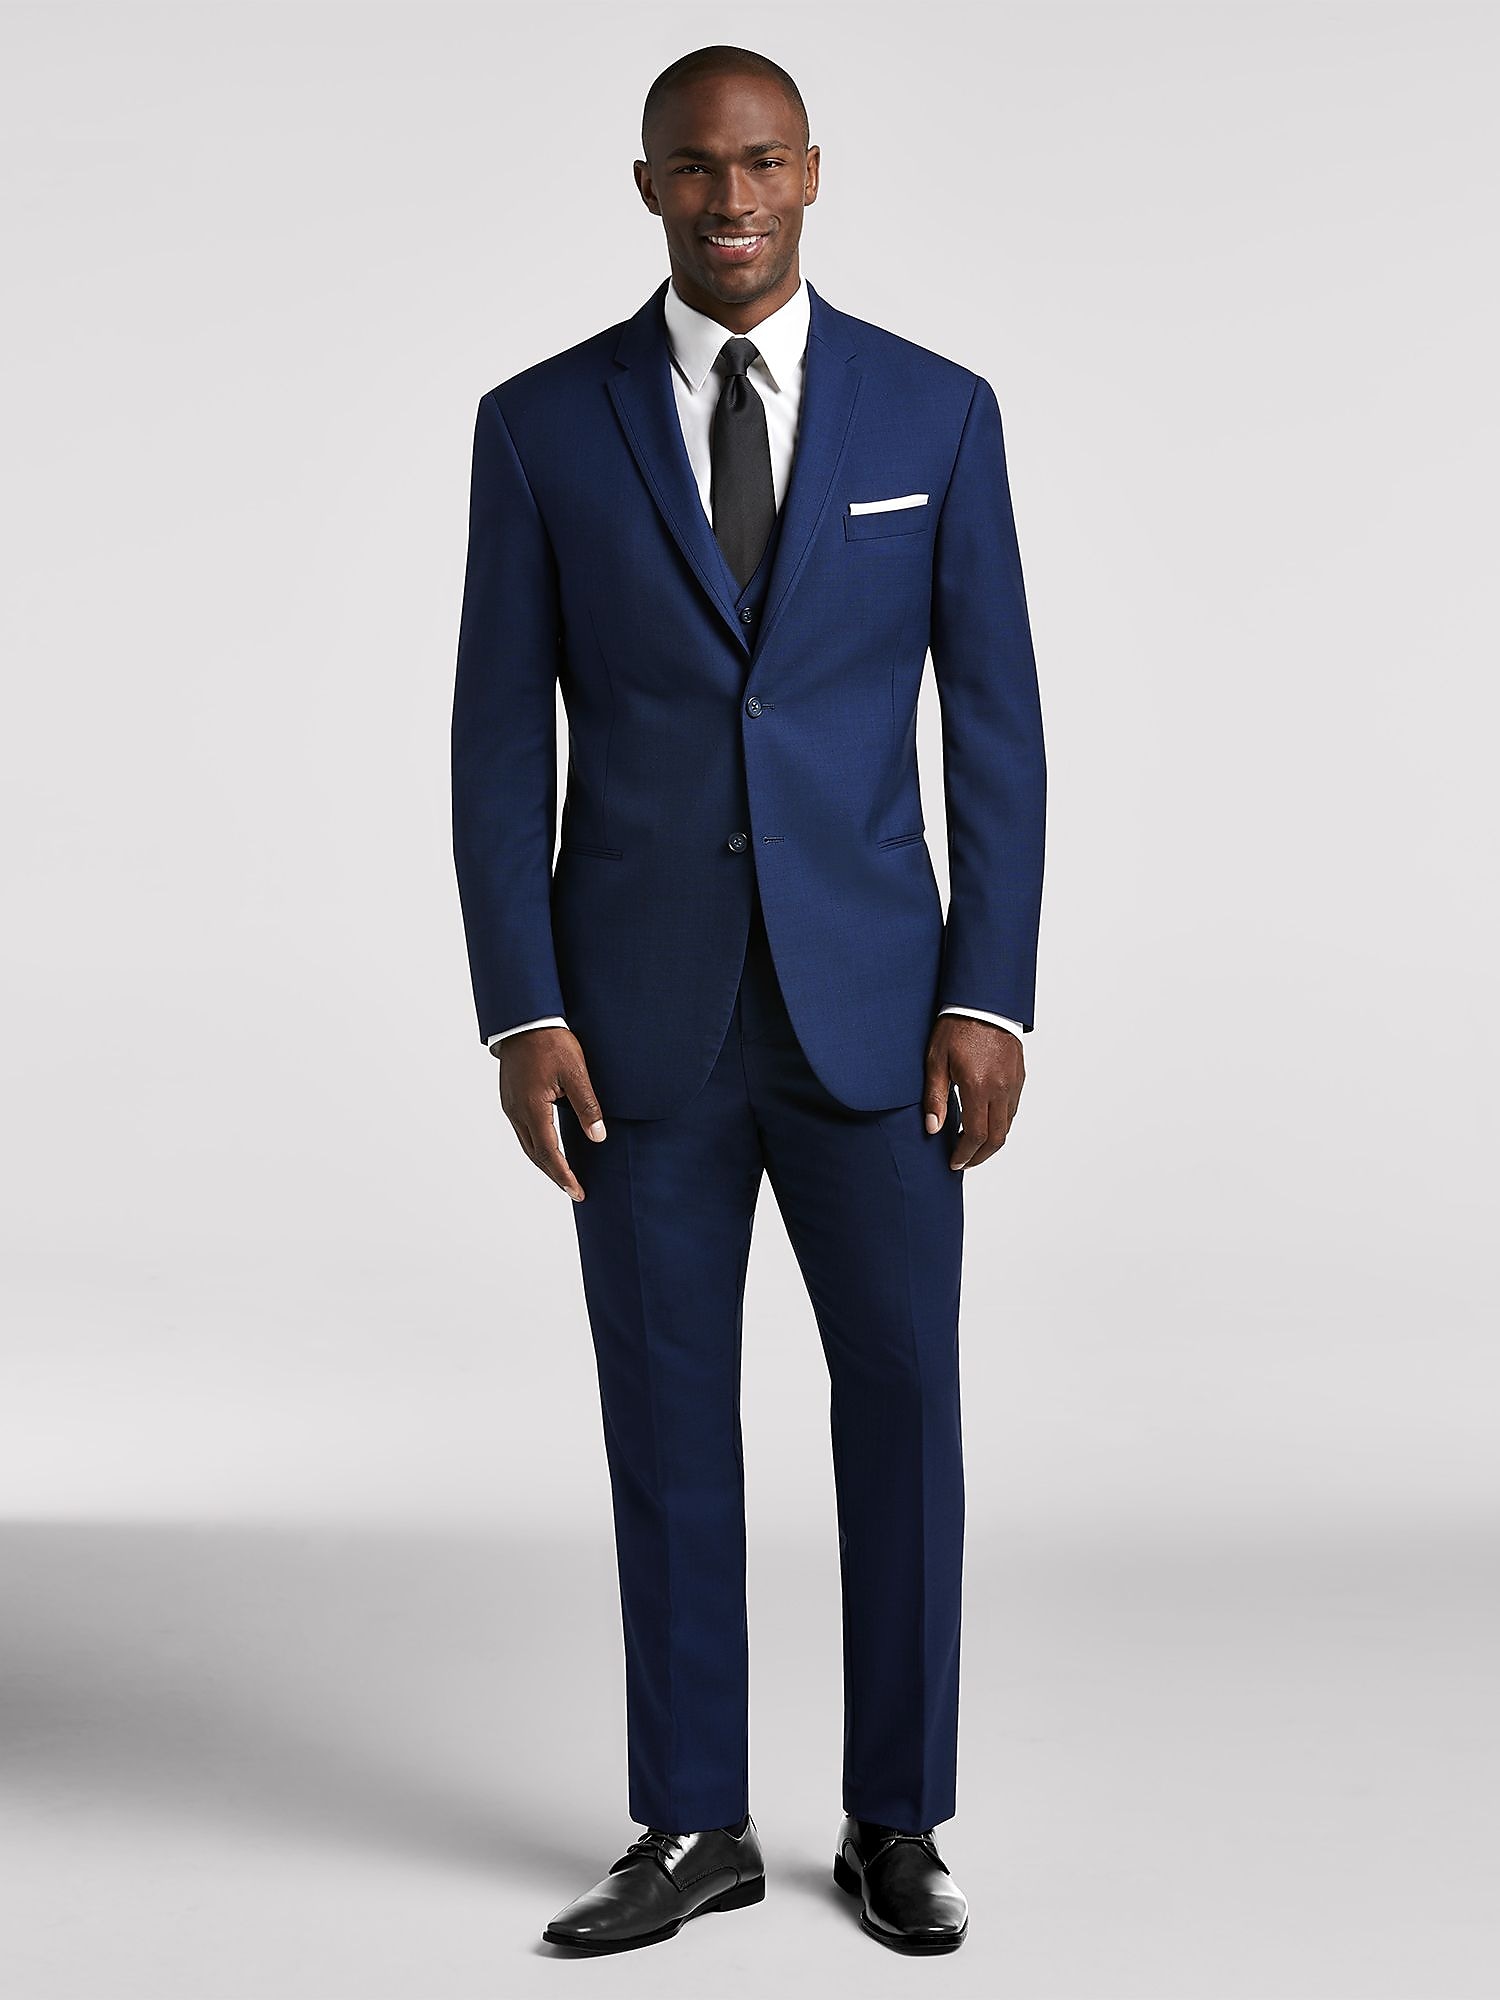 Blue Wedding Suit by Calvin Klein Suit Rental Men's